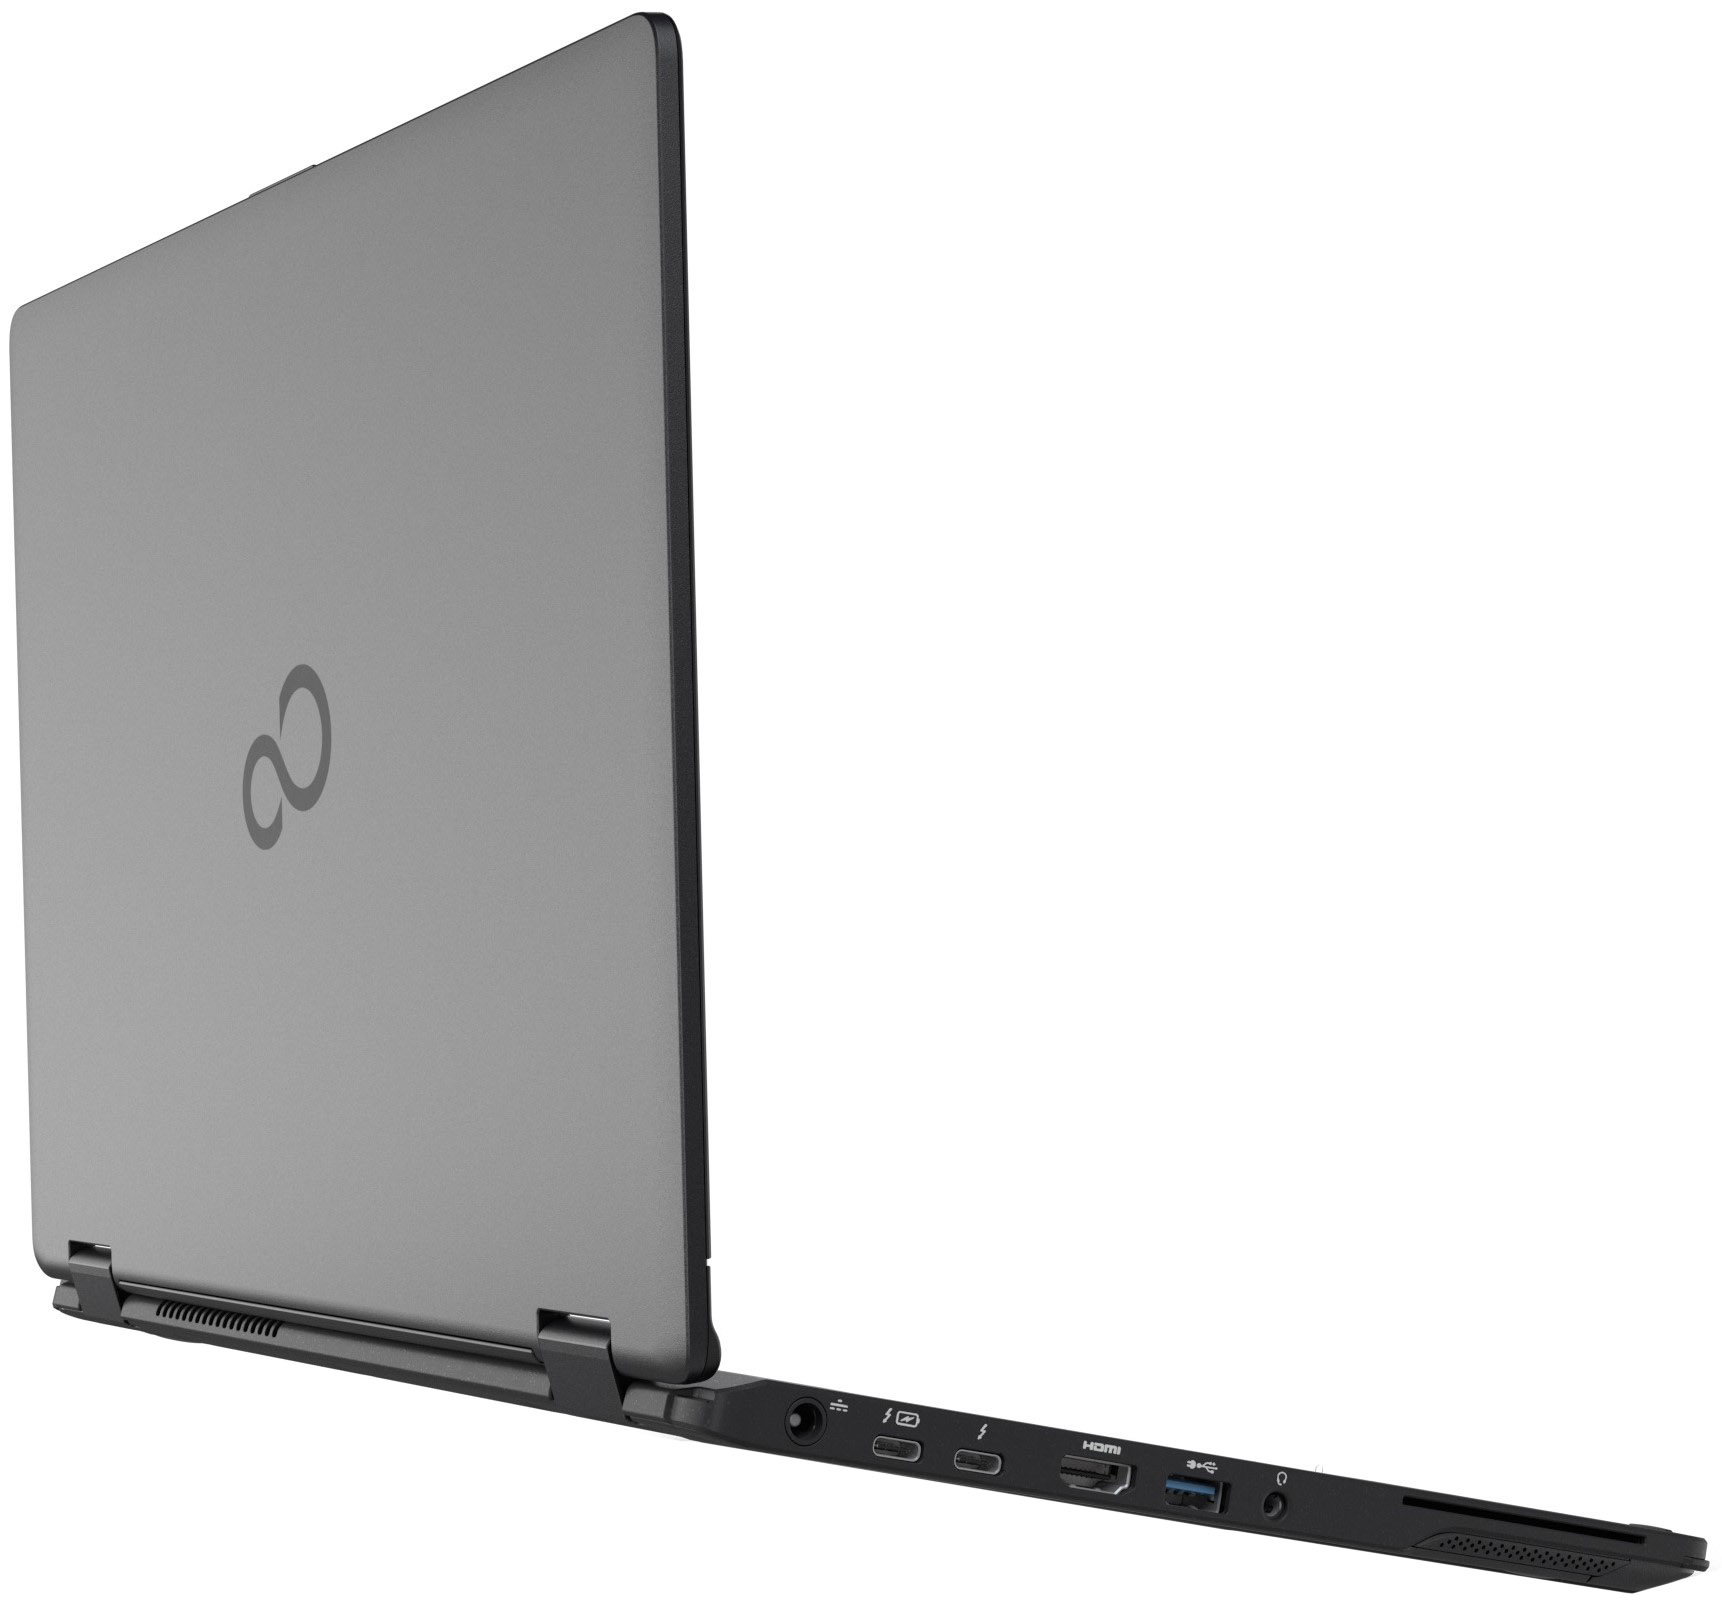 Fujitsu LifeBook U9311 - Specs, Tests, and Prices | LaptopMedia.com